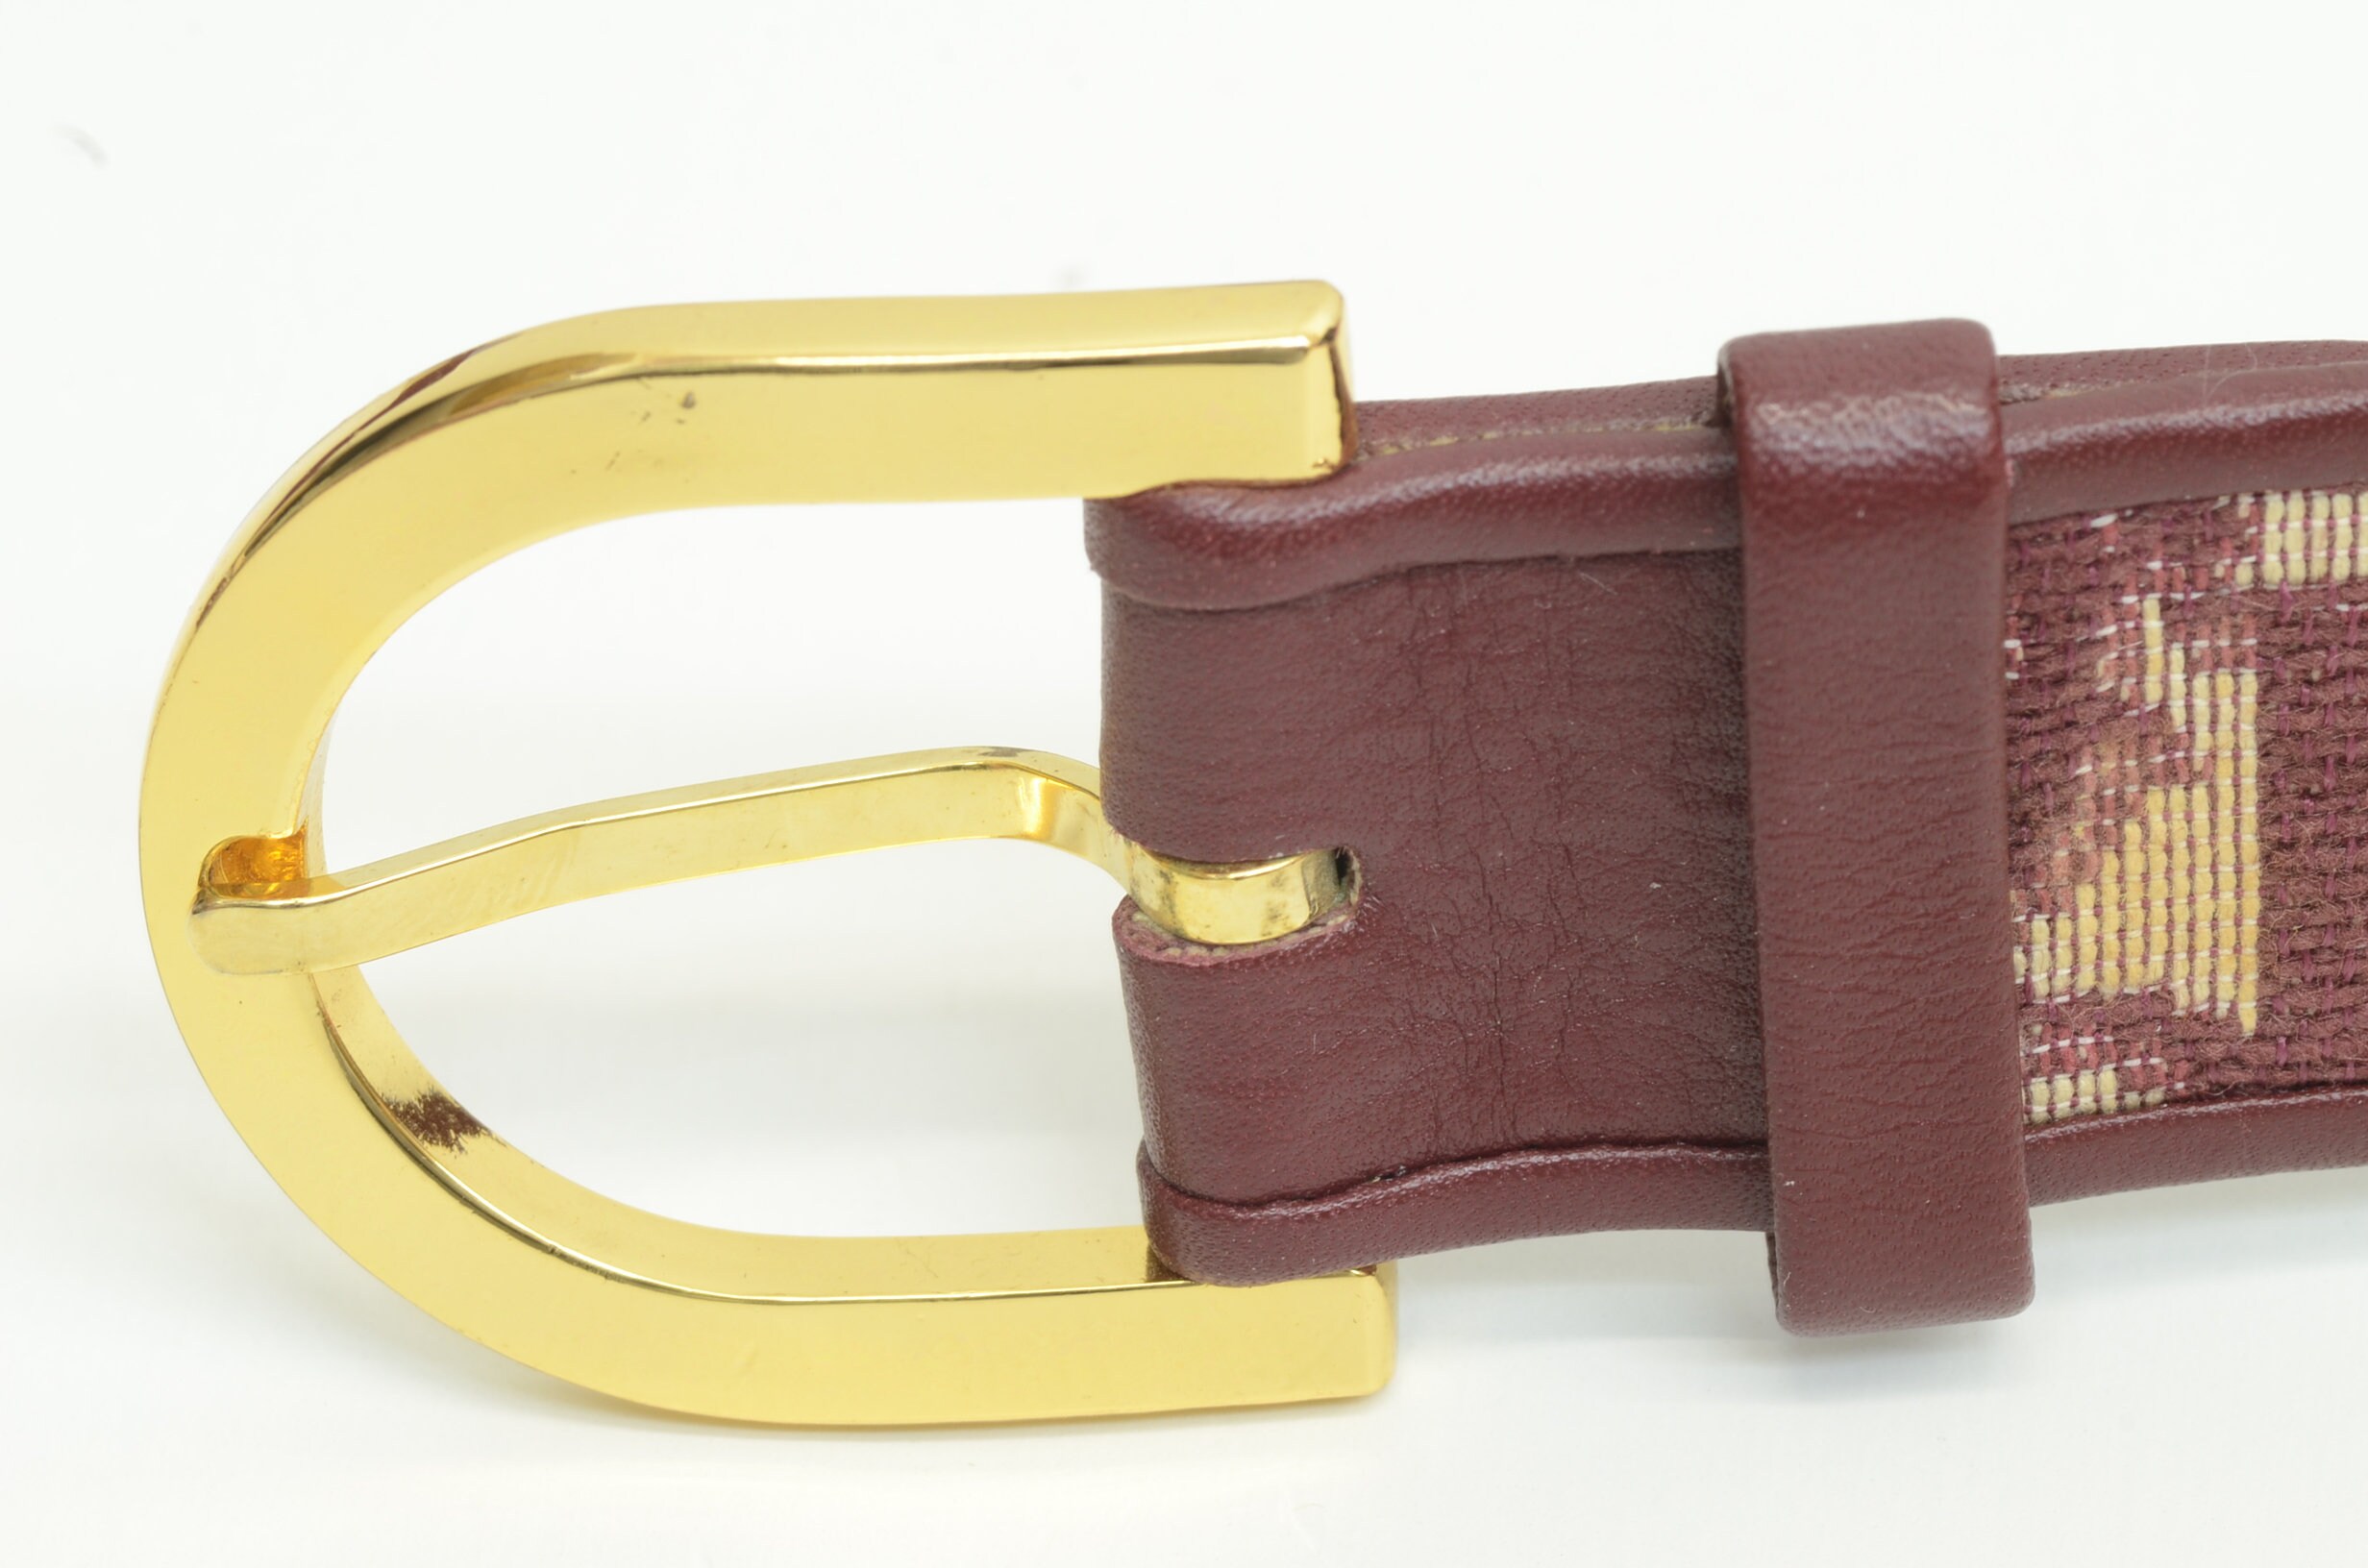 Authentic Christian Dior Belt Burgundy Leather GP Buckle 